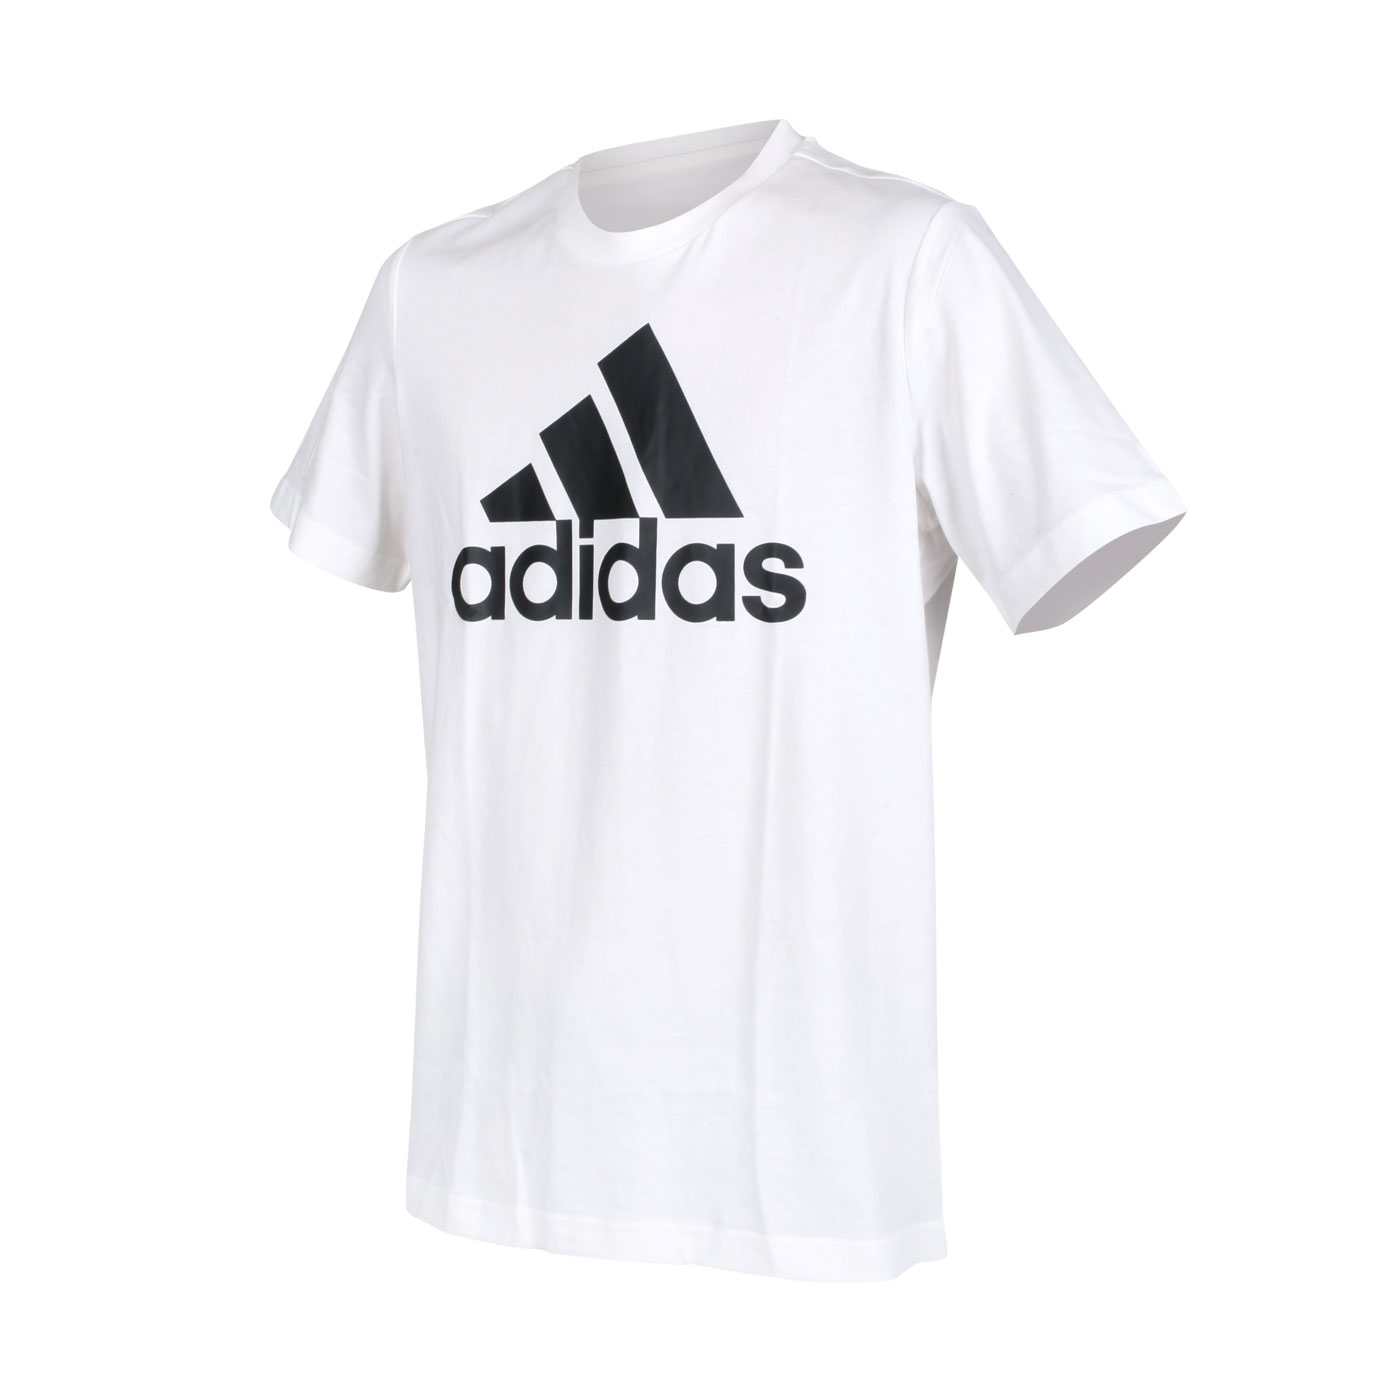 ADIDAS 男款短袖T恤 GK9121 - 白黑